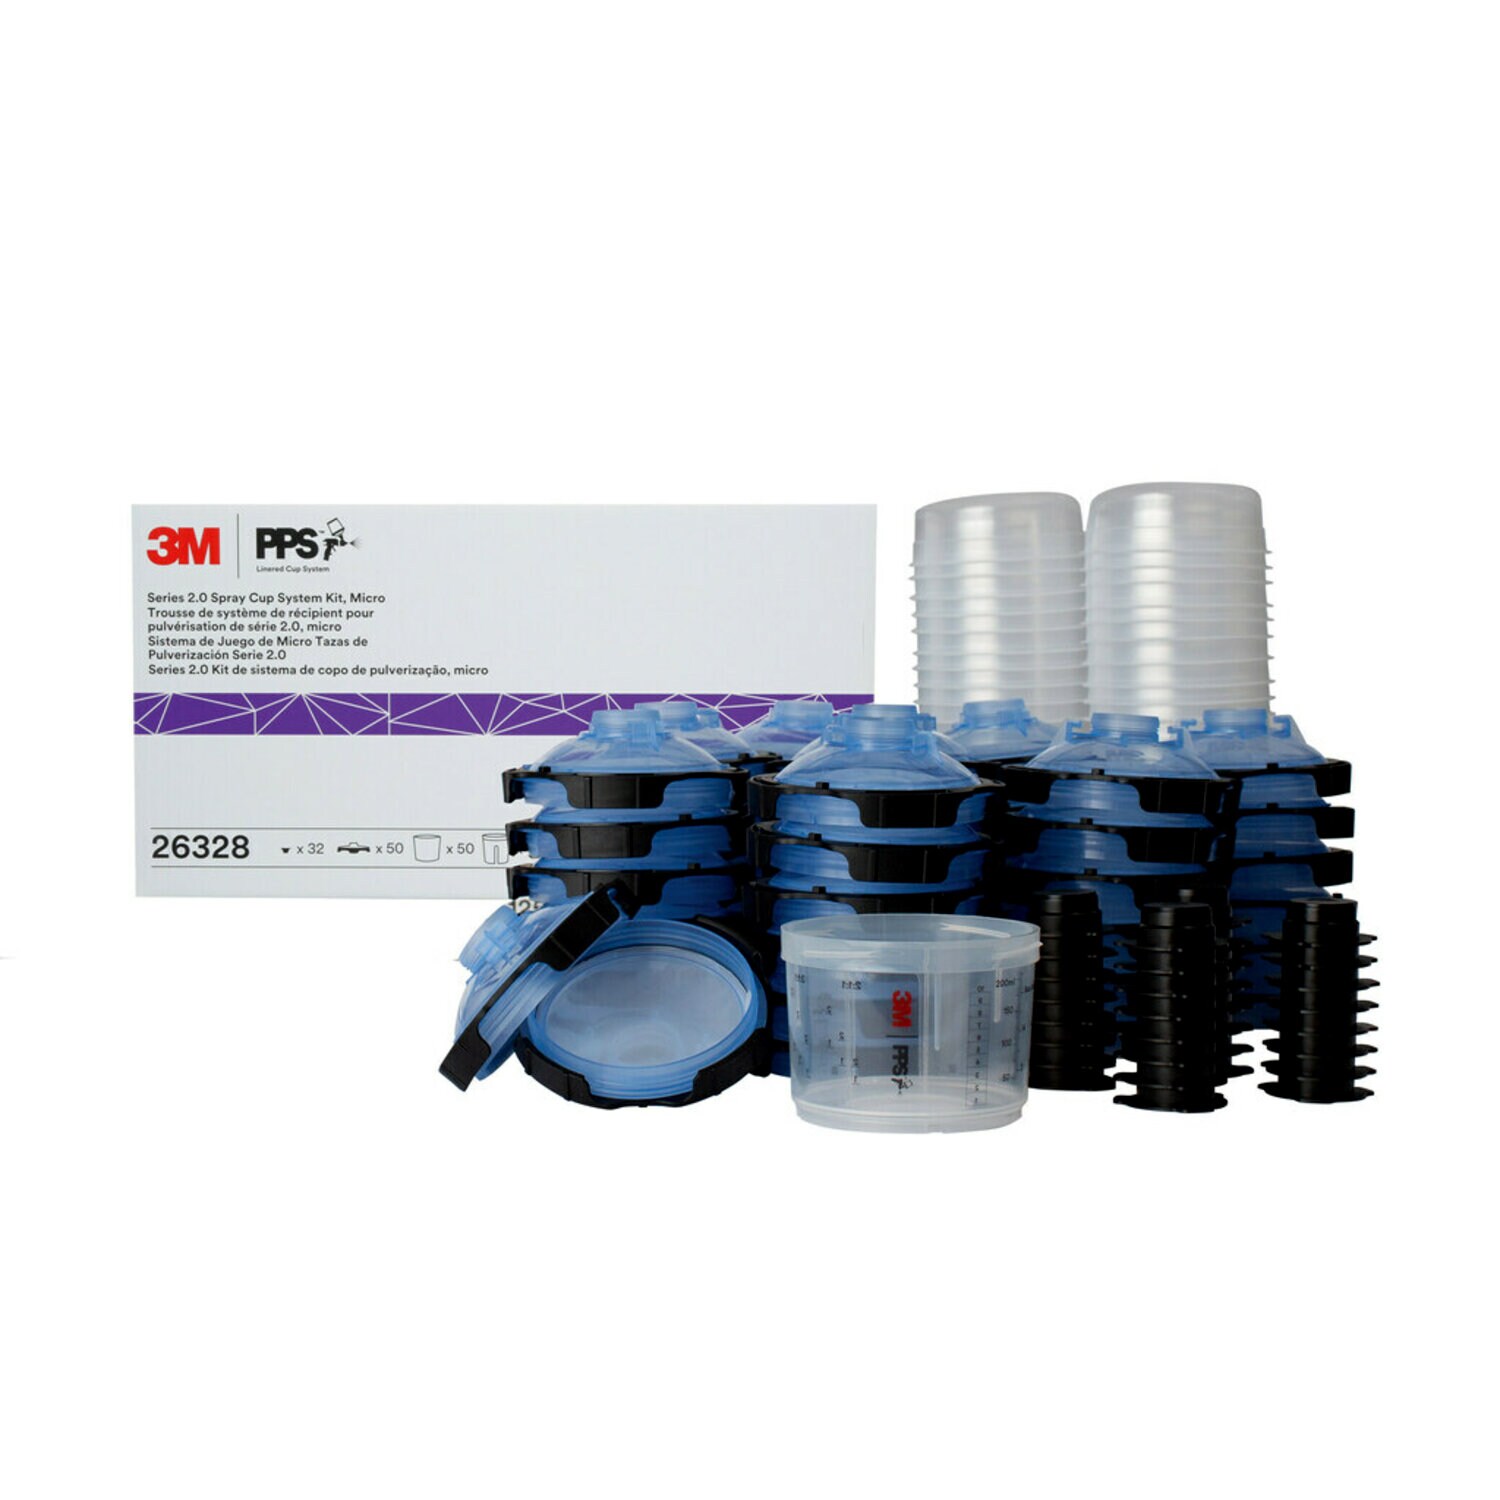 7100284555 - 3M PPS Series 2.0 Spray Cup System Kit 26328, Micro (3 fl oz, 90 mL),
125 Micron Filter, 1 Kit/Case